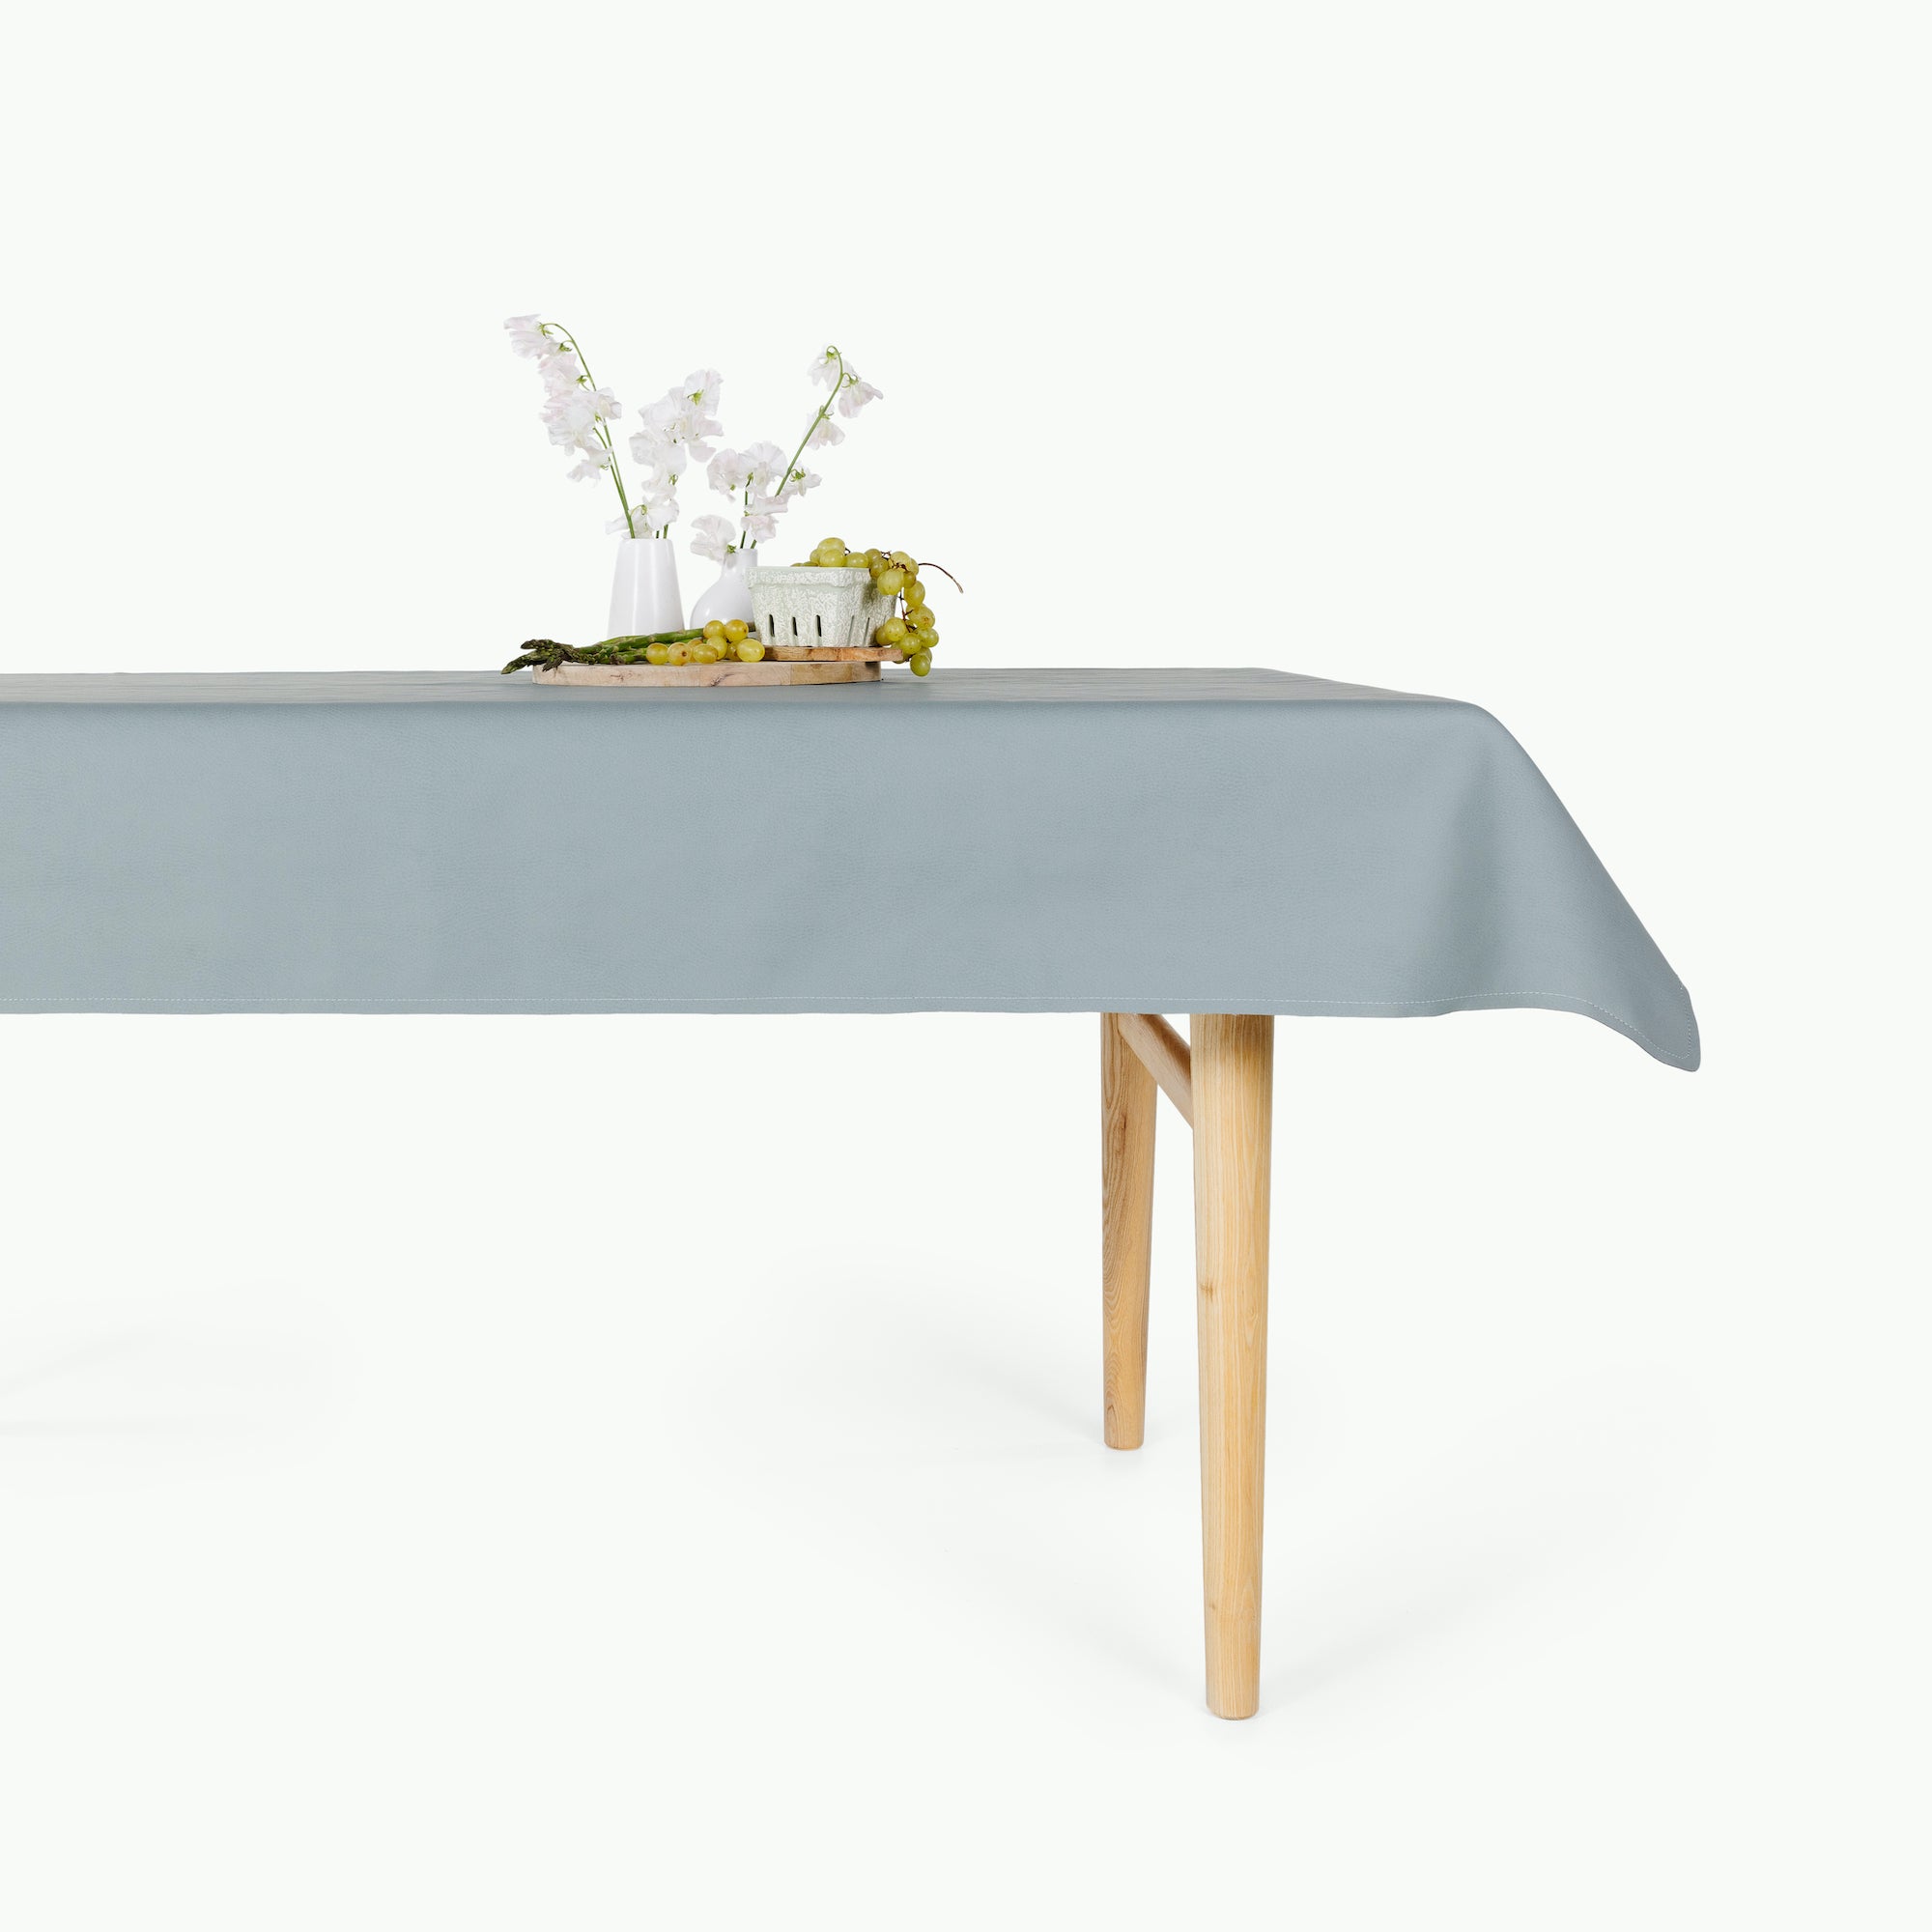 Amalfi / 6 Foot@tablecloth on table 